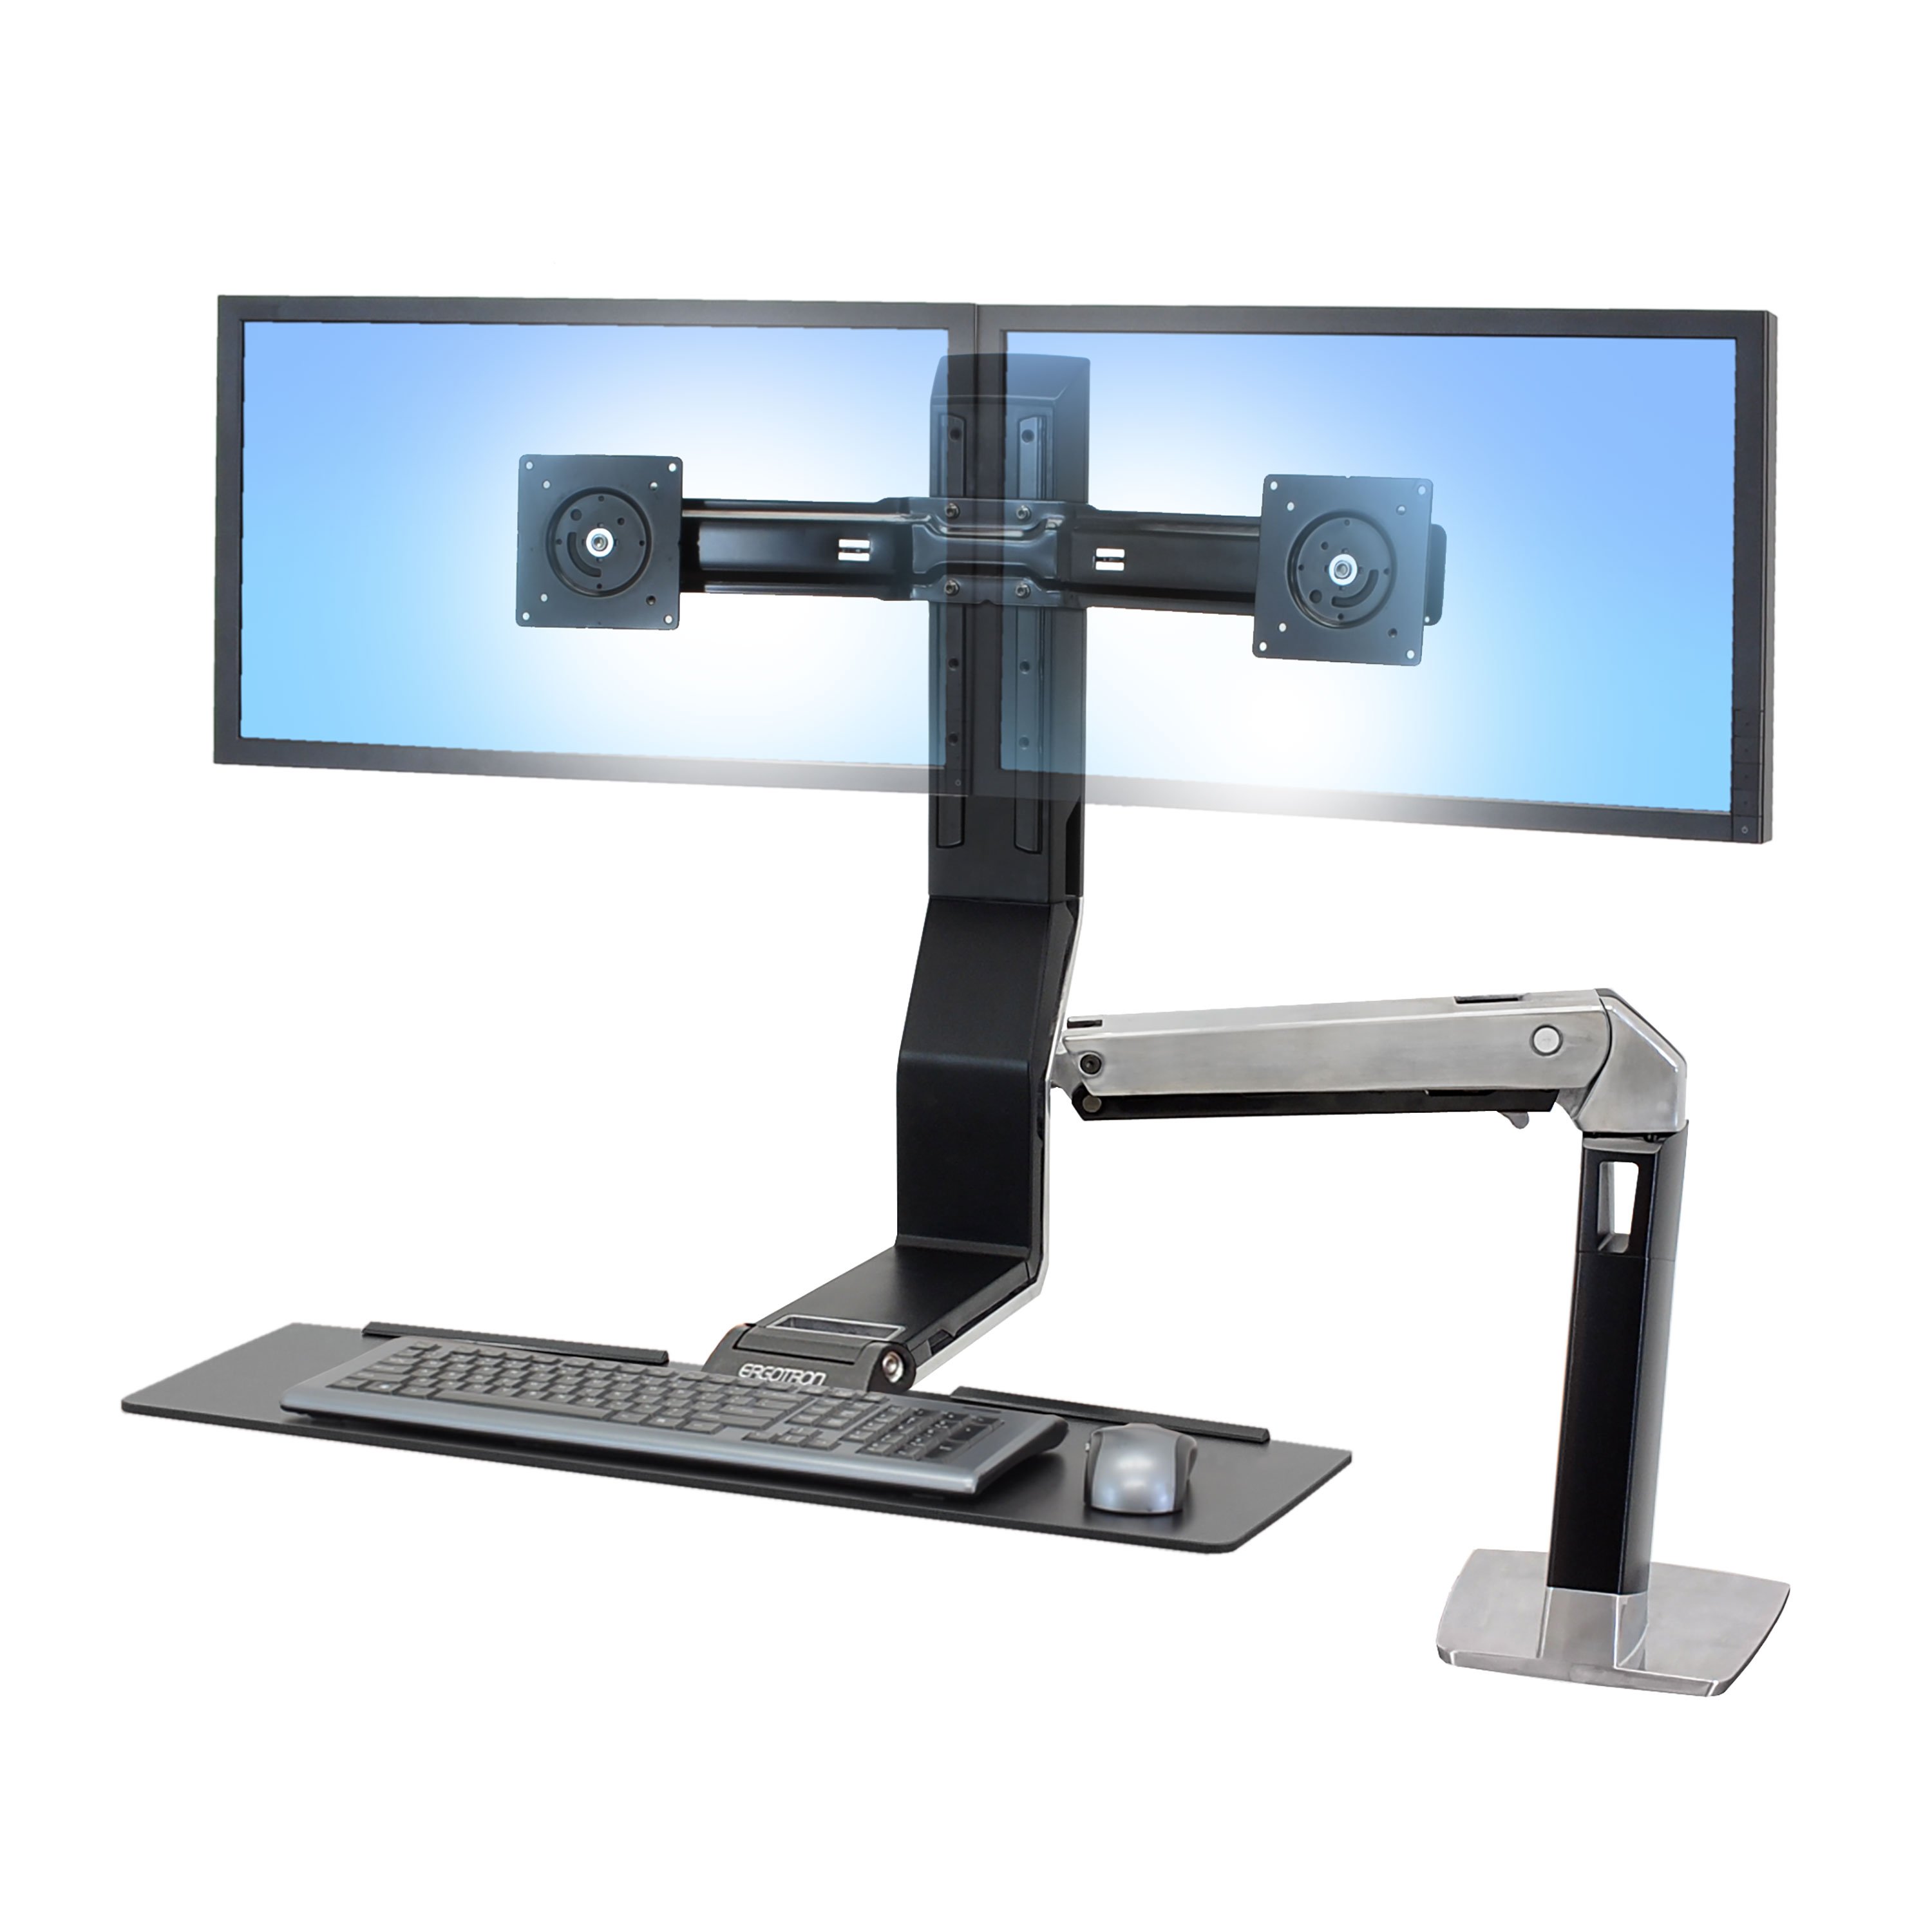 Ergotron 24-257-026 WorkFit-A, Dual Monitor Computer Stand Up Desk